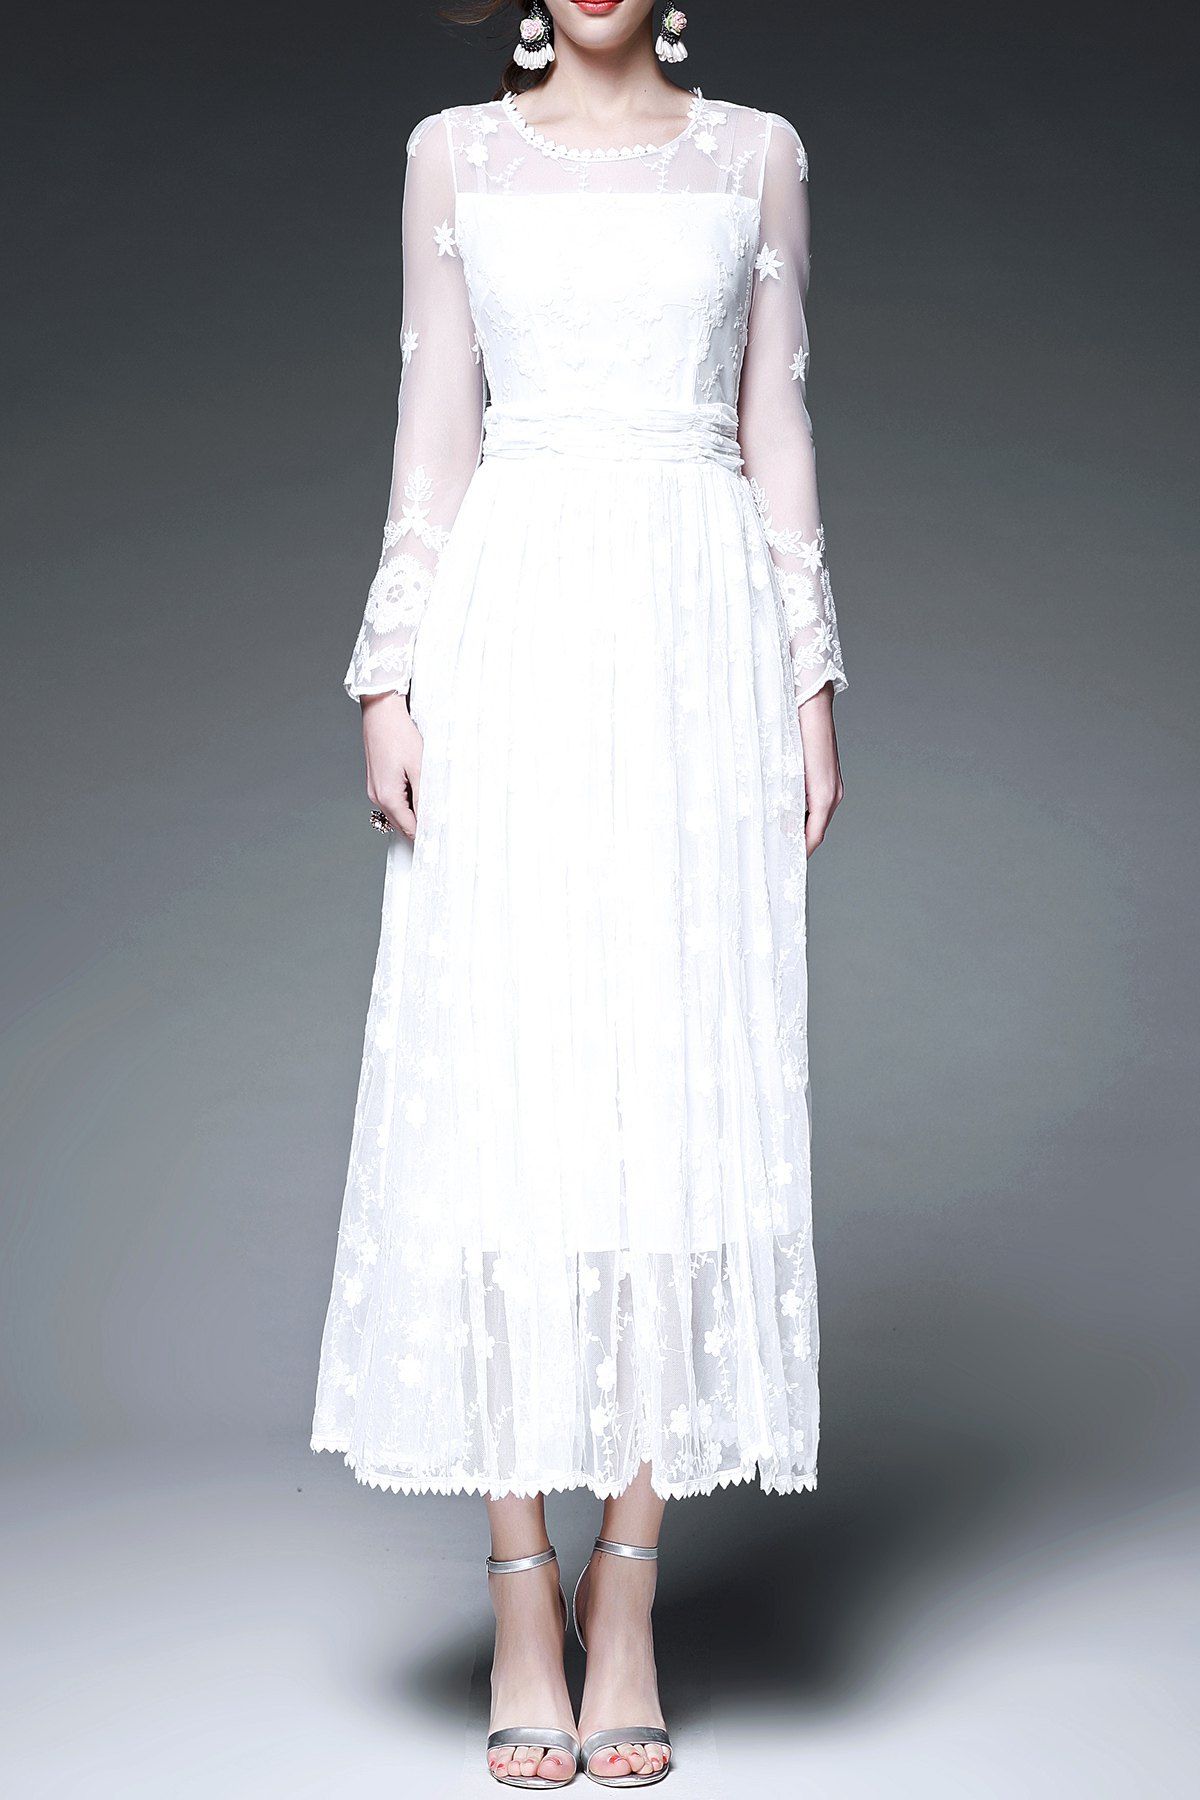 Sheer Traditional Wedding Tea Length Dress